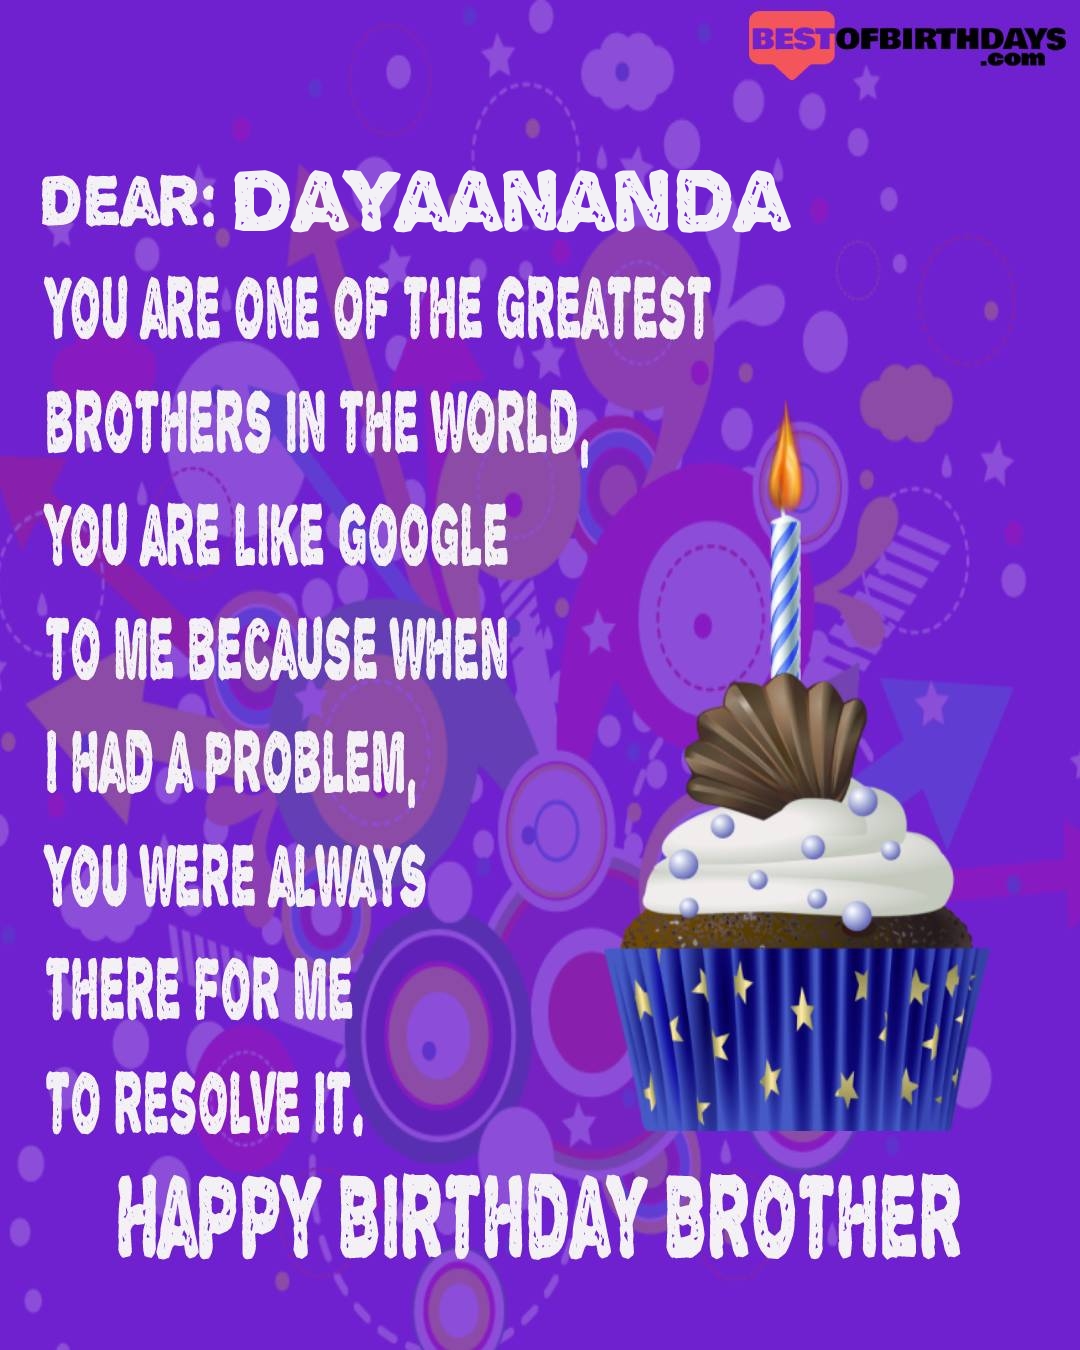 Happy birthday dayaananda bhai brother bro